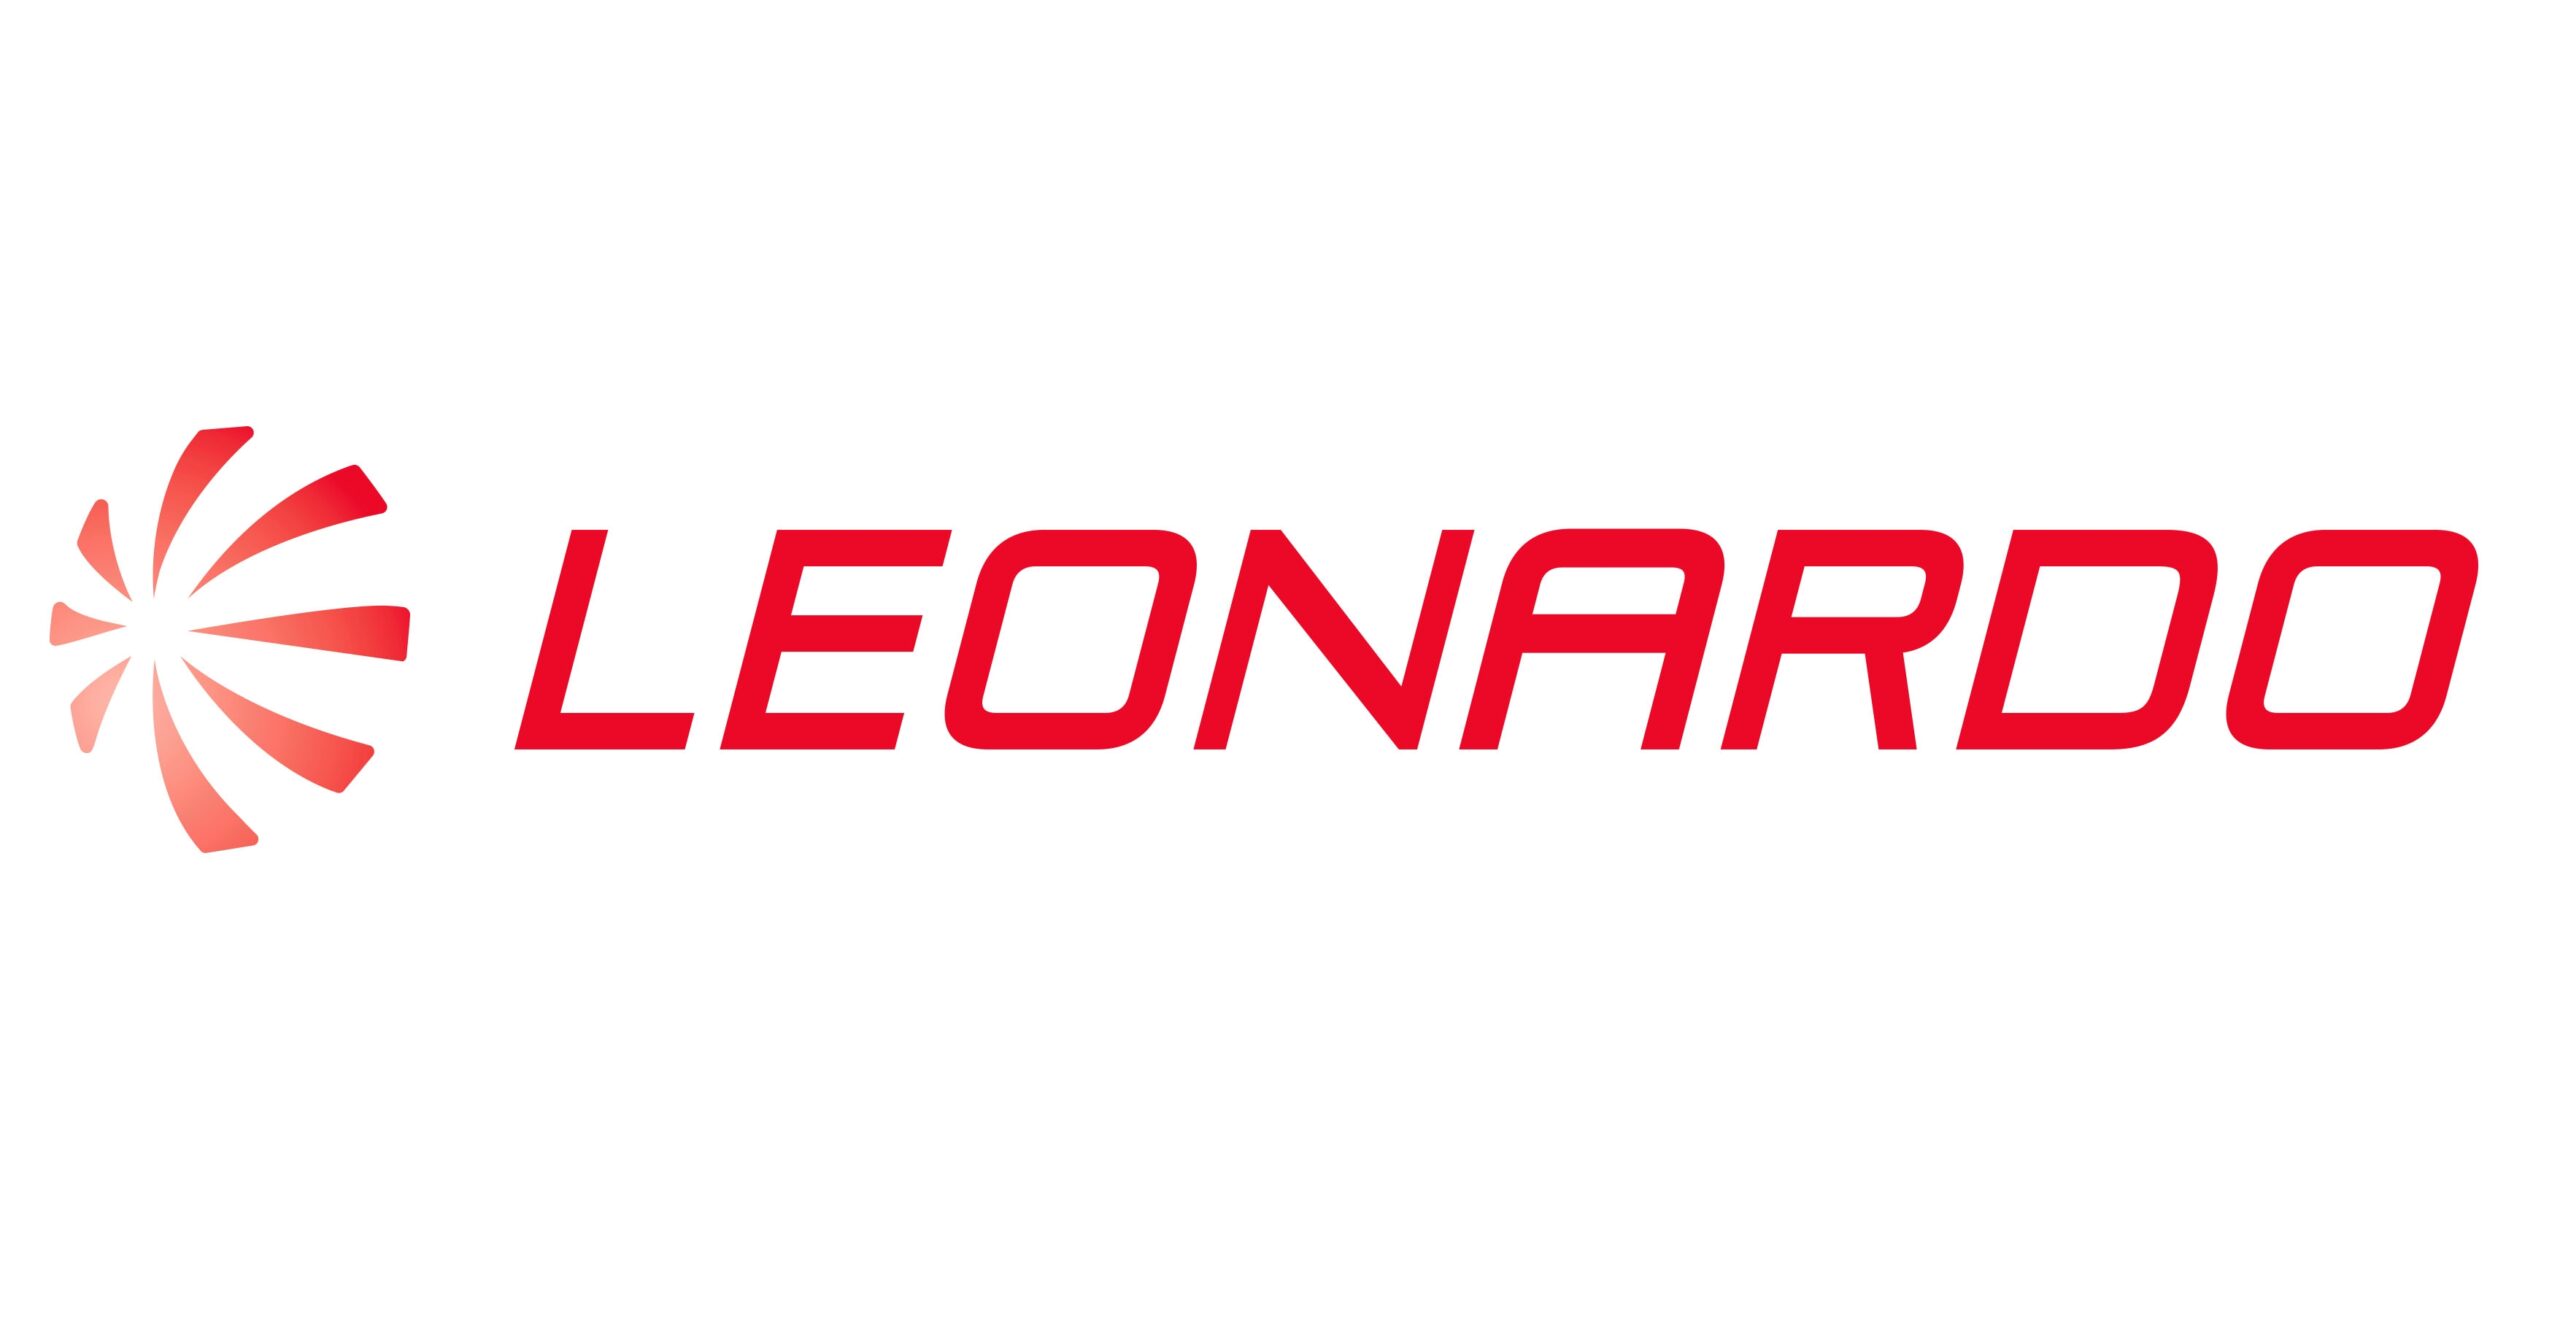 leonardo-finmeccanica-logo-160428133334